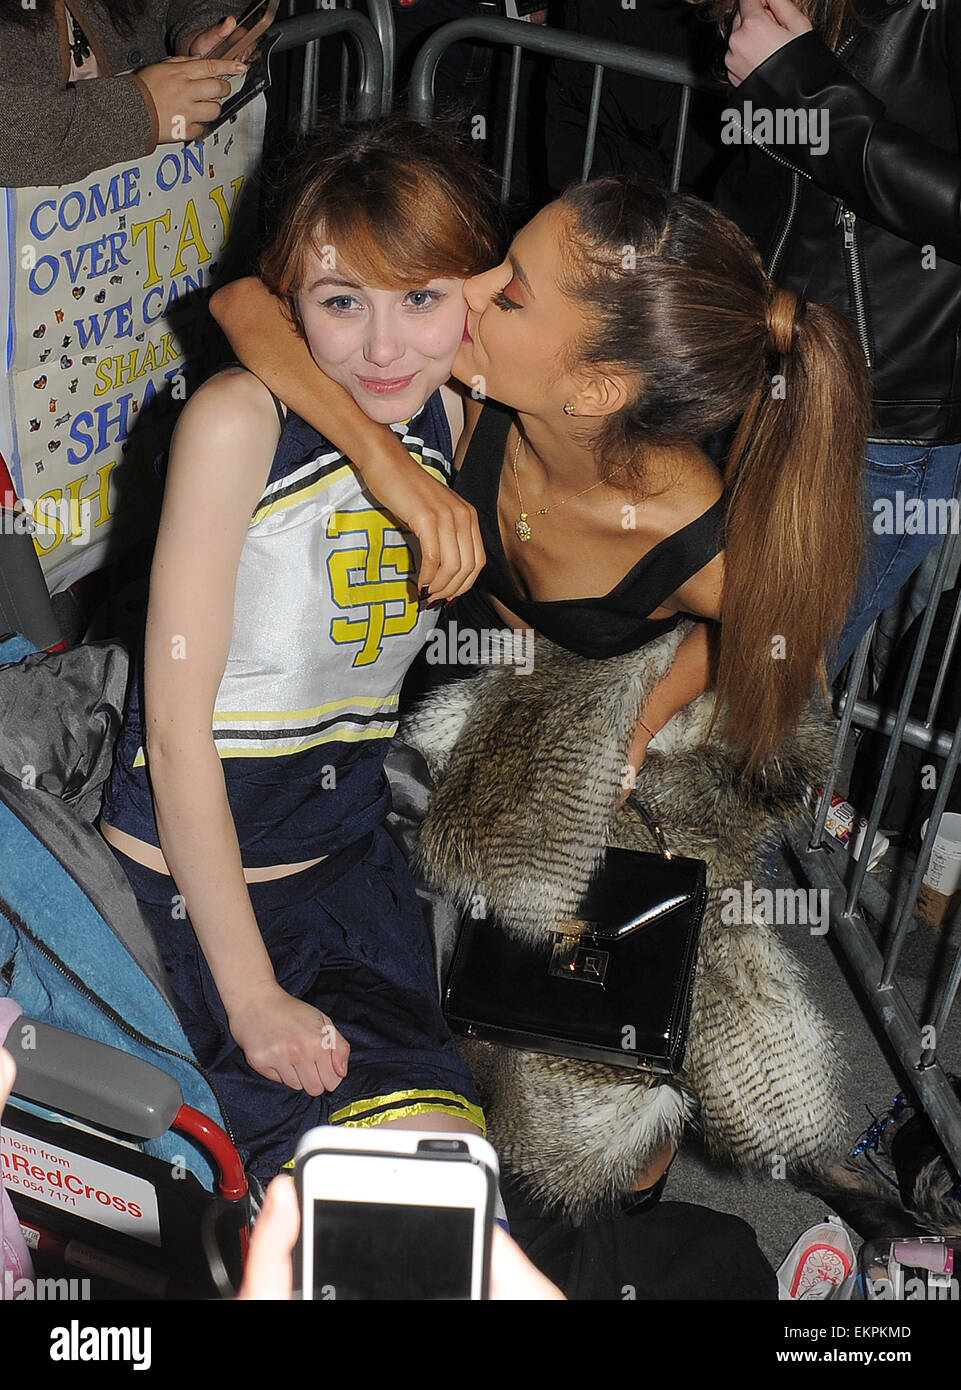 Ariana Grande Kissing A Girl 2